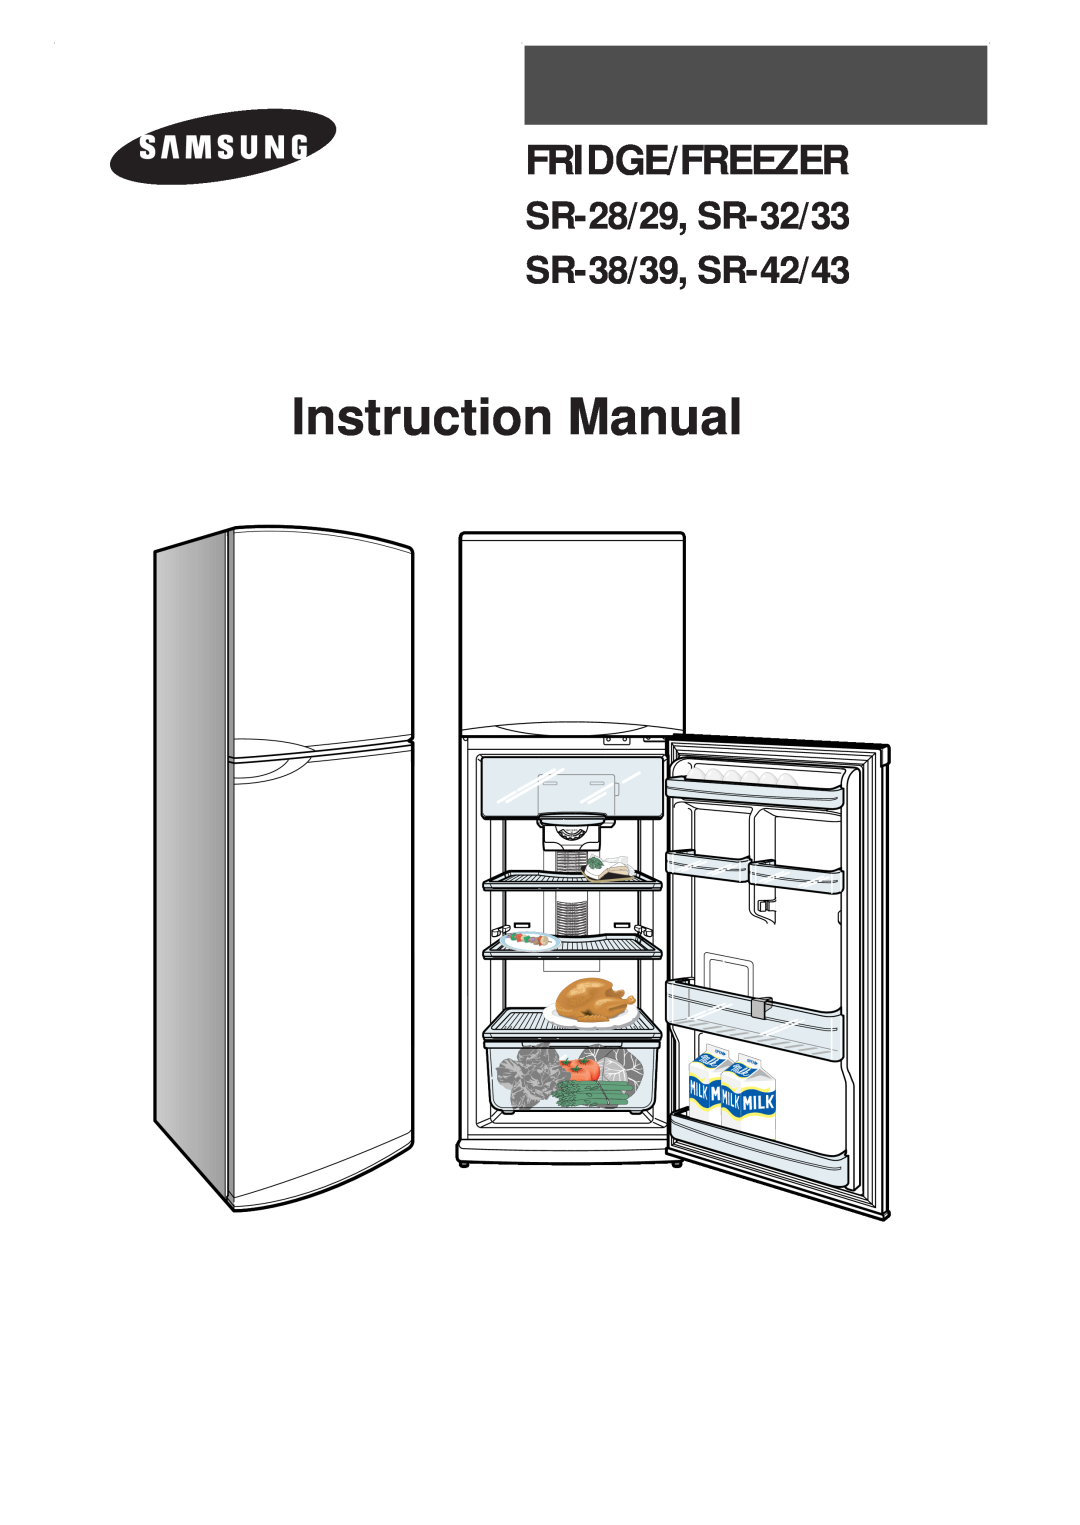 Samsung SR-32RMB, SR-29NXA, SR-29NXB instruction manual Fridge/Freezer, SR-28/29, SR-32/33 SR-38/39, SR-42/43, Tempcontrol 